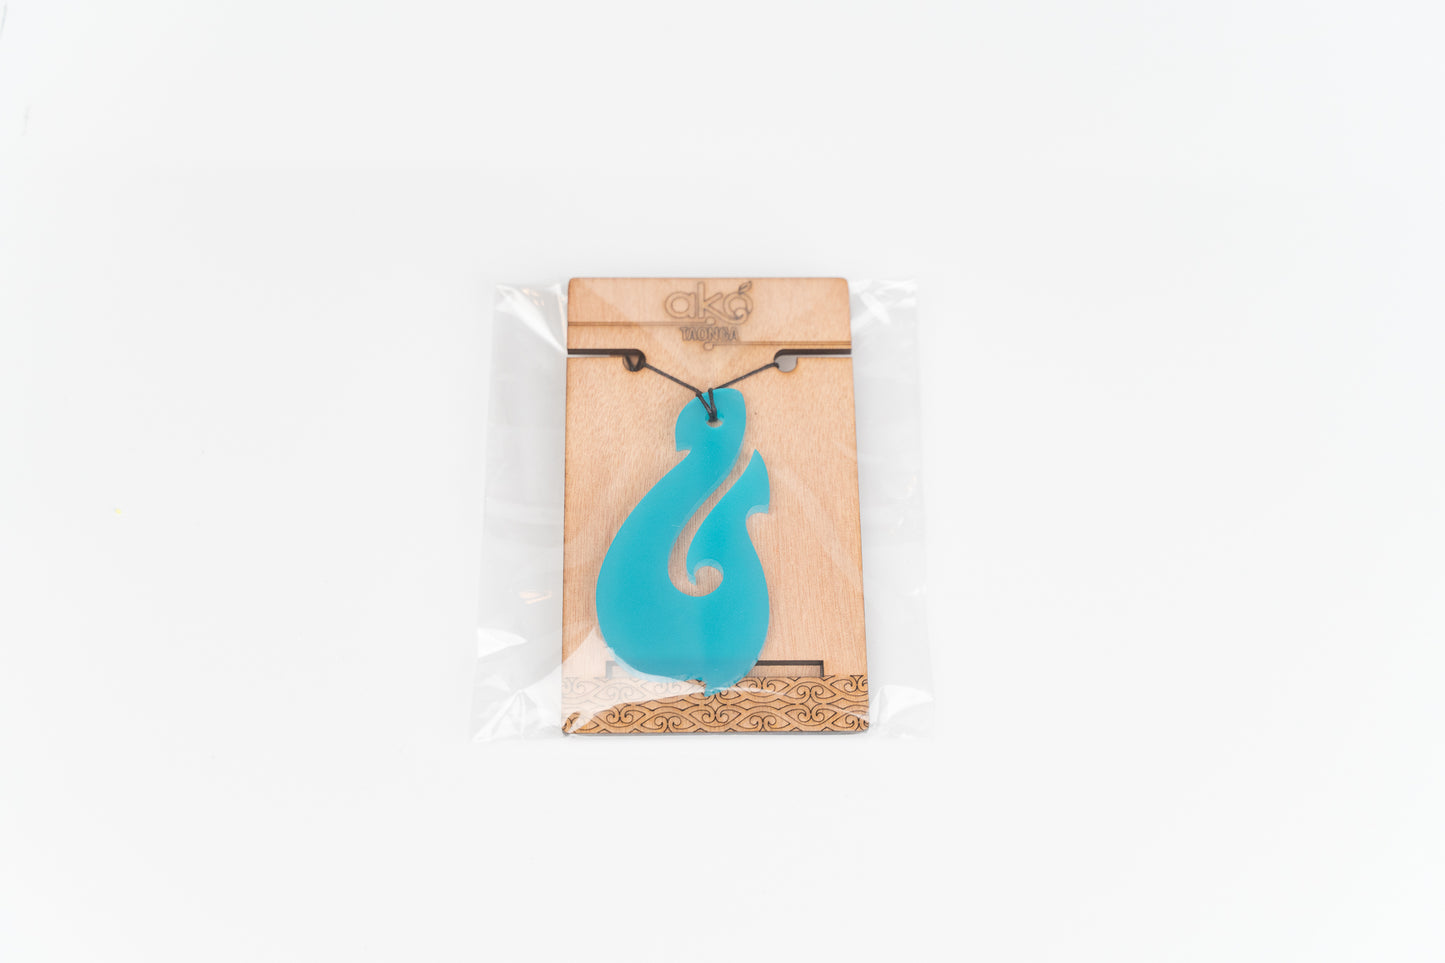 Hei Matau (Fish Hook) - Small Necklace